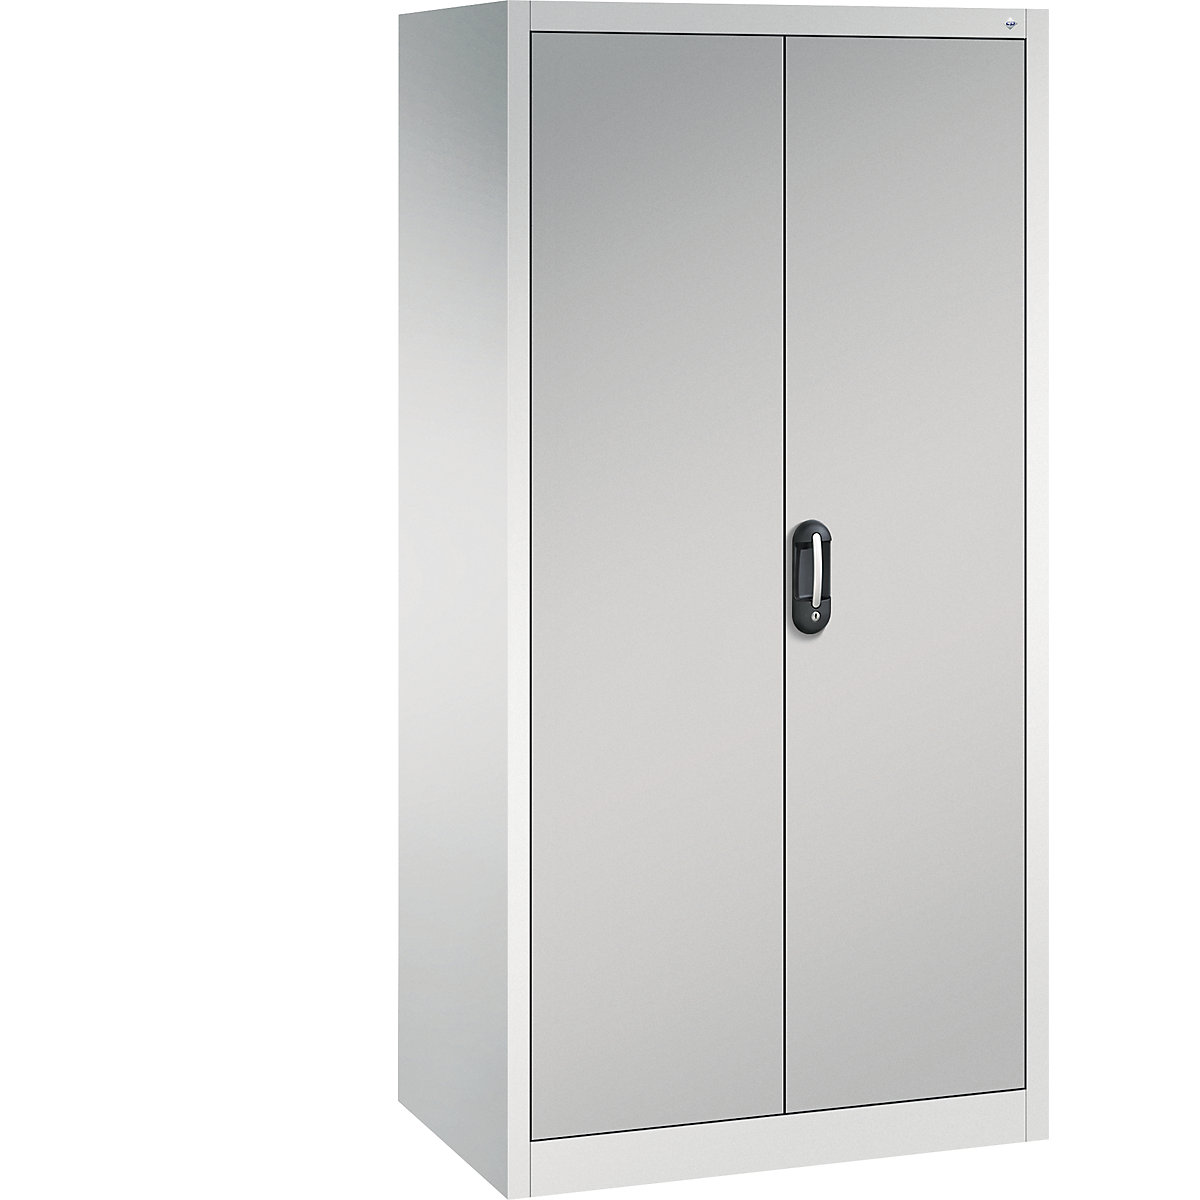 ACURADO universal cupboard – C+P, WxD 930 x 600 mm, light grey / white aluminium-26